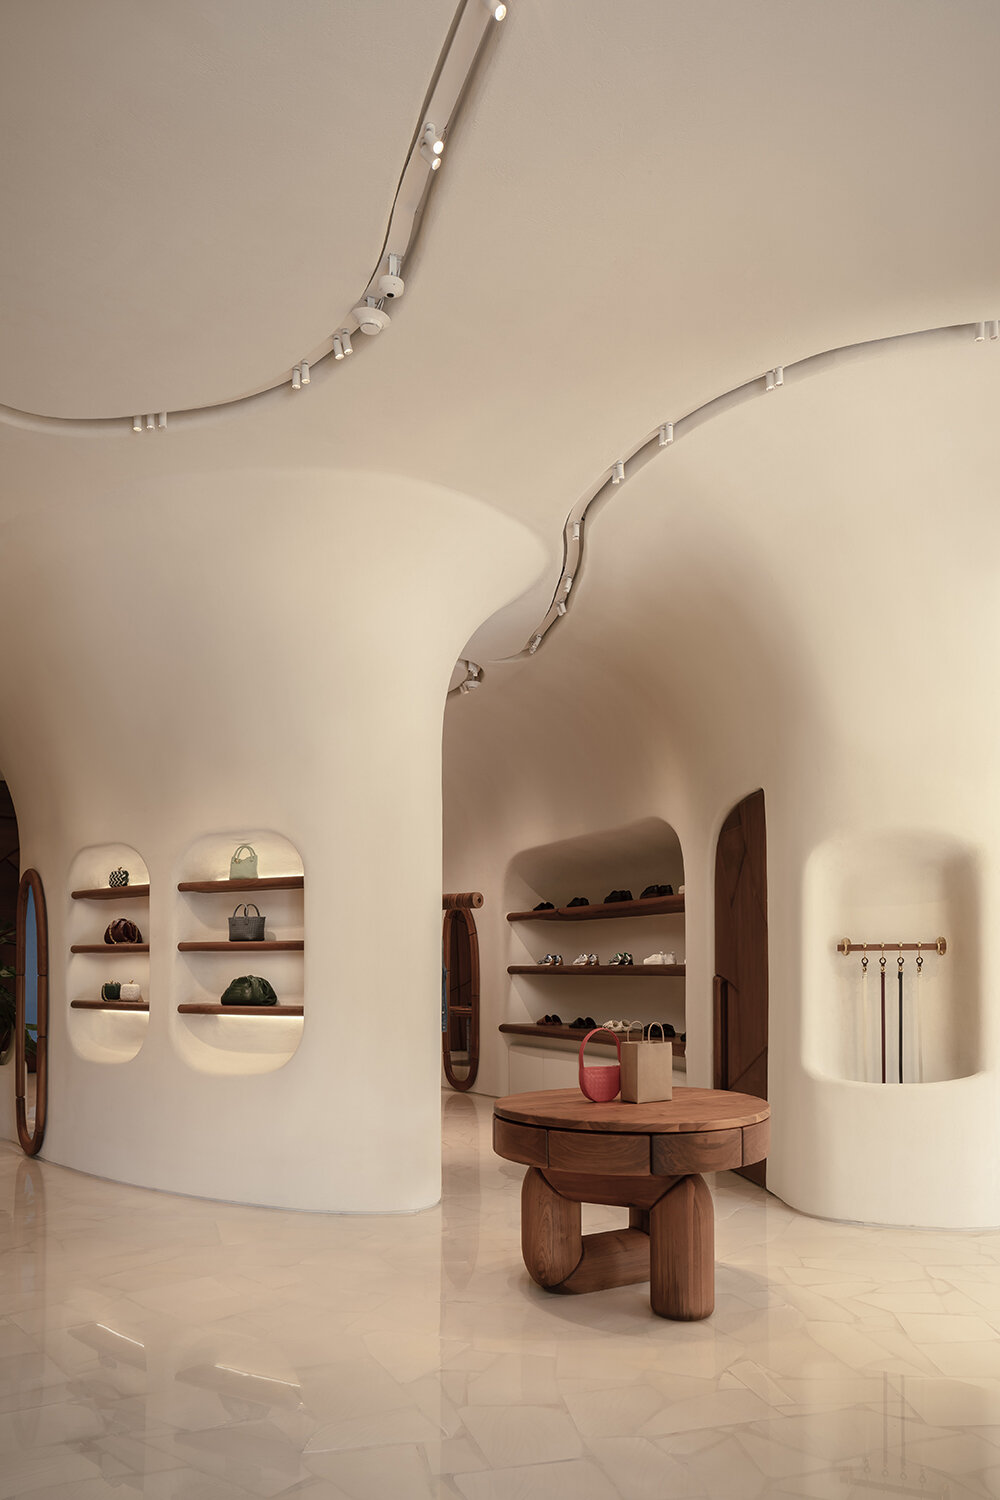 Cancun welcomes first Bottega Veneta store inspired by Mediterranean coastal architecture